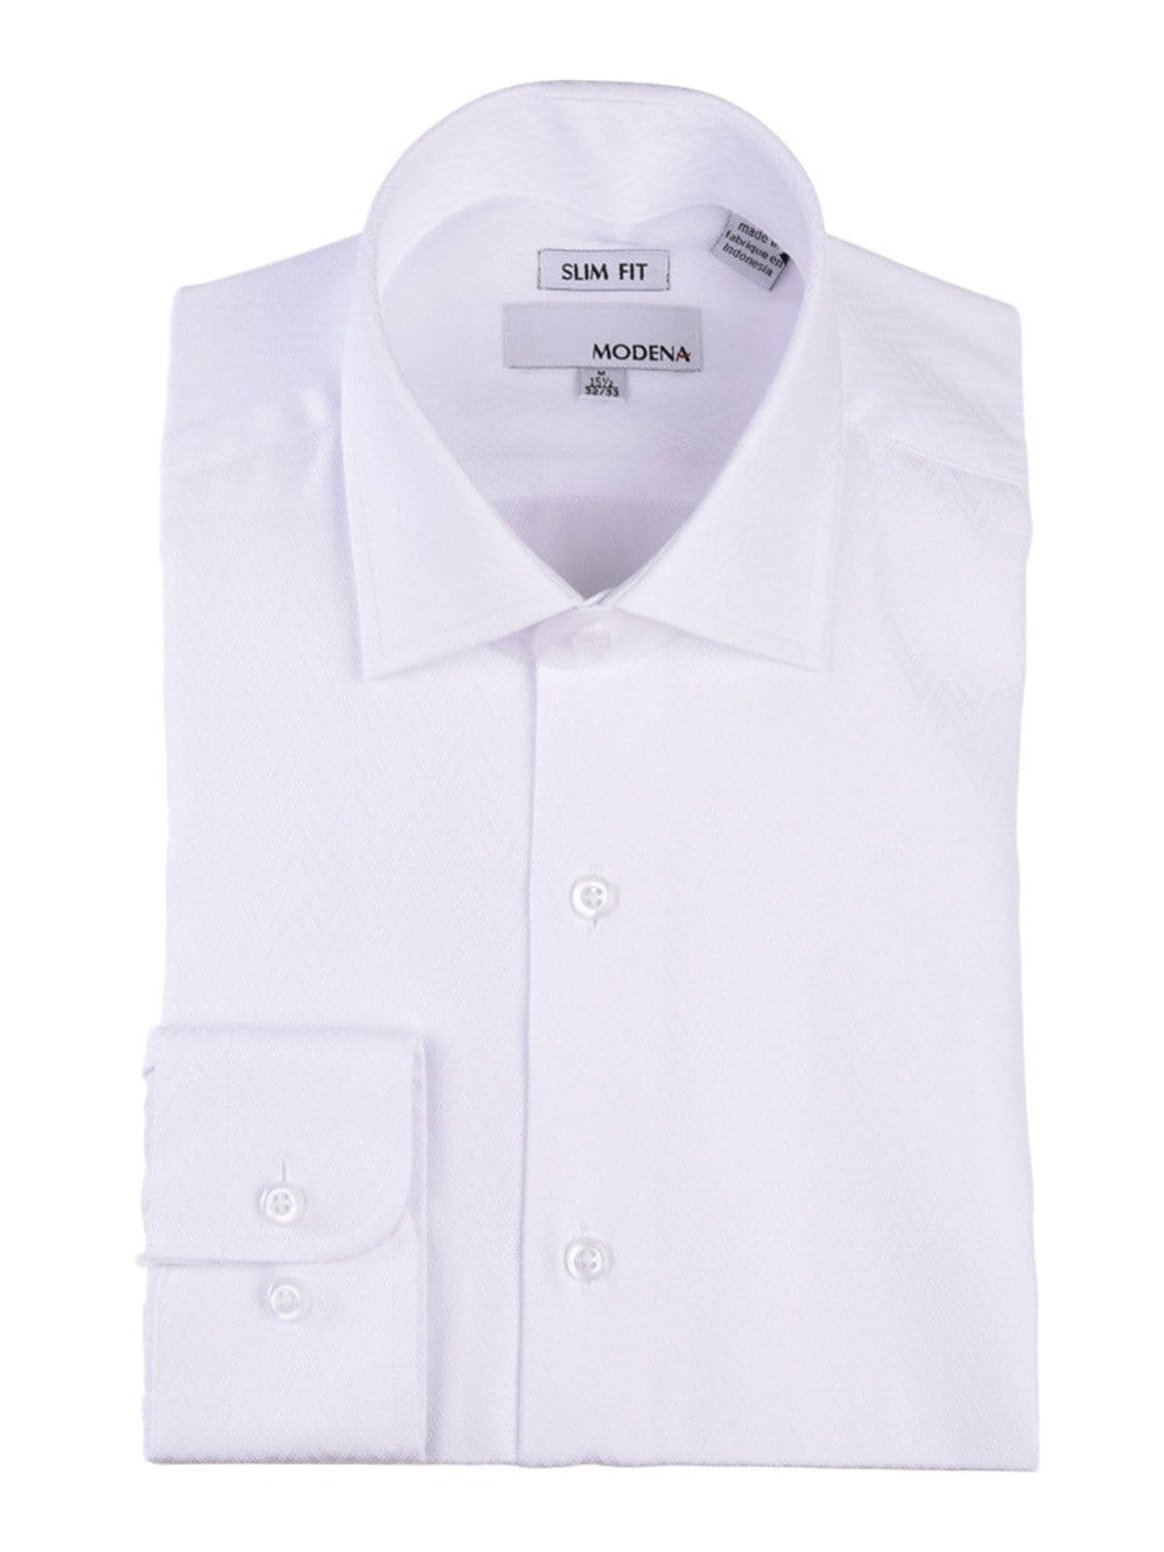 Modena Sale Shirts 15 1/2 32/33 Slim Fit White Tonal Chevron Check Spread Collar Cotton Blend Dress Shirt